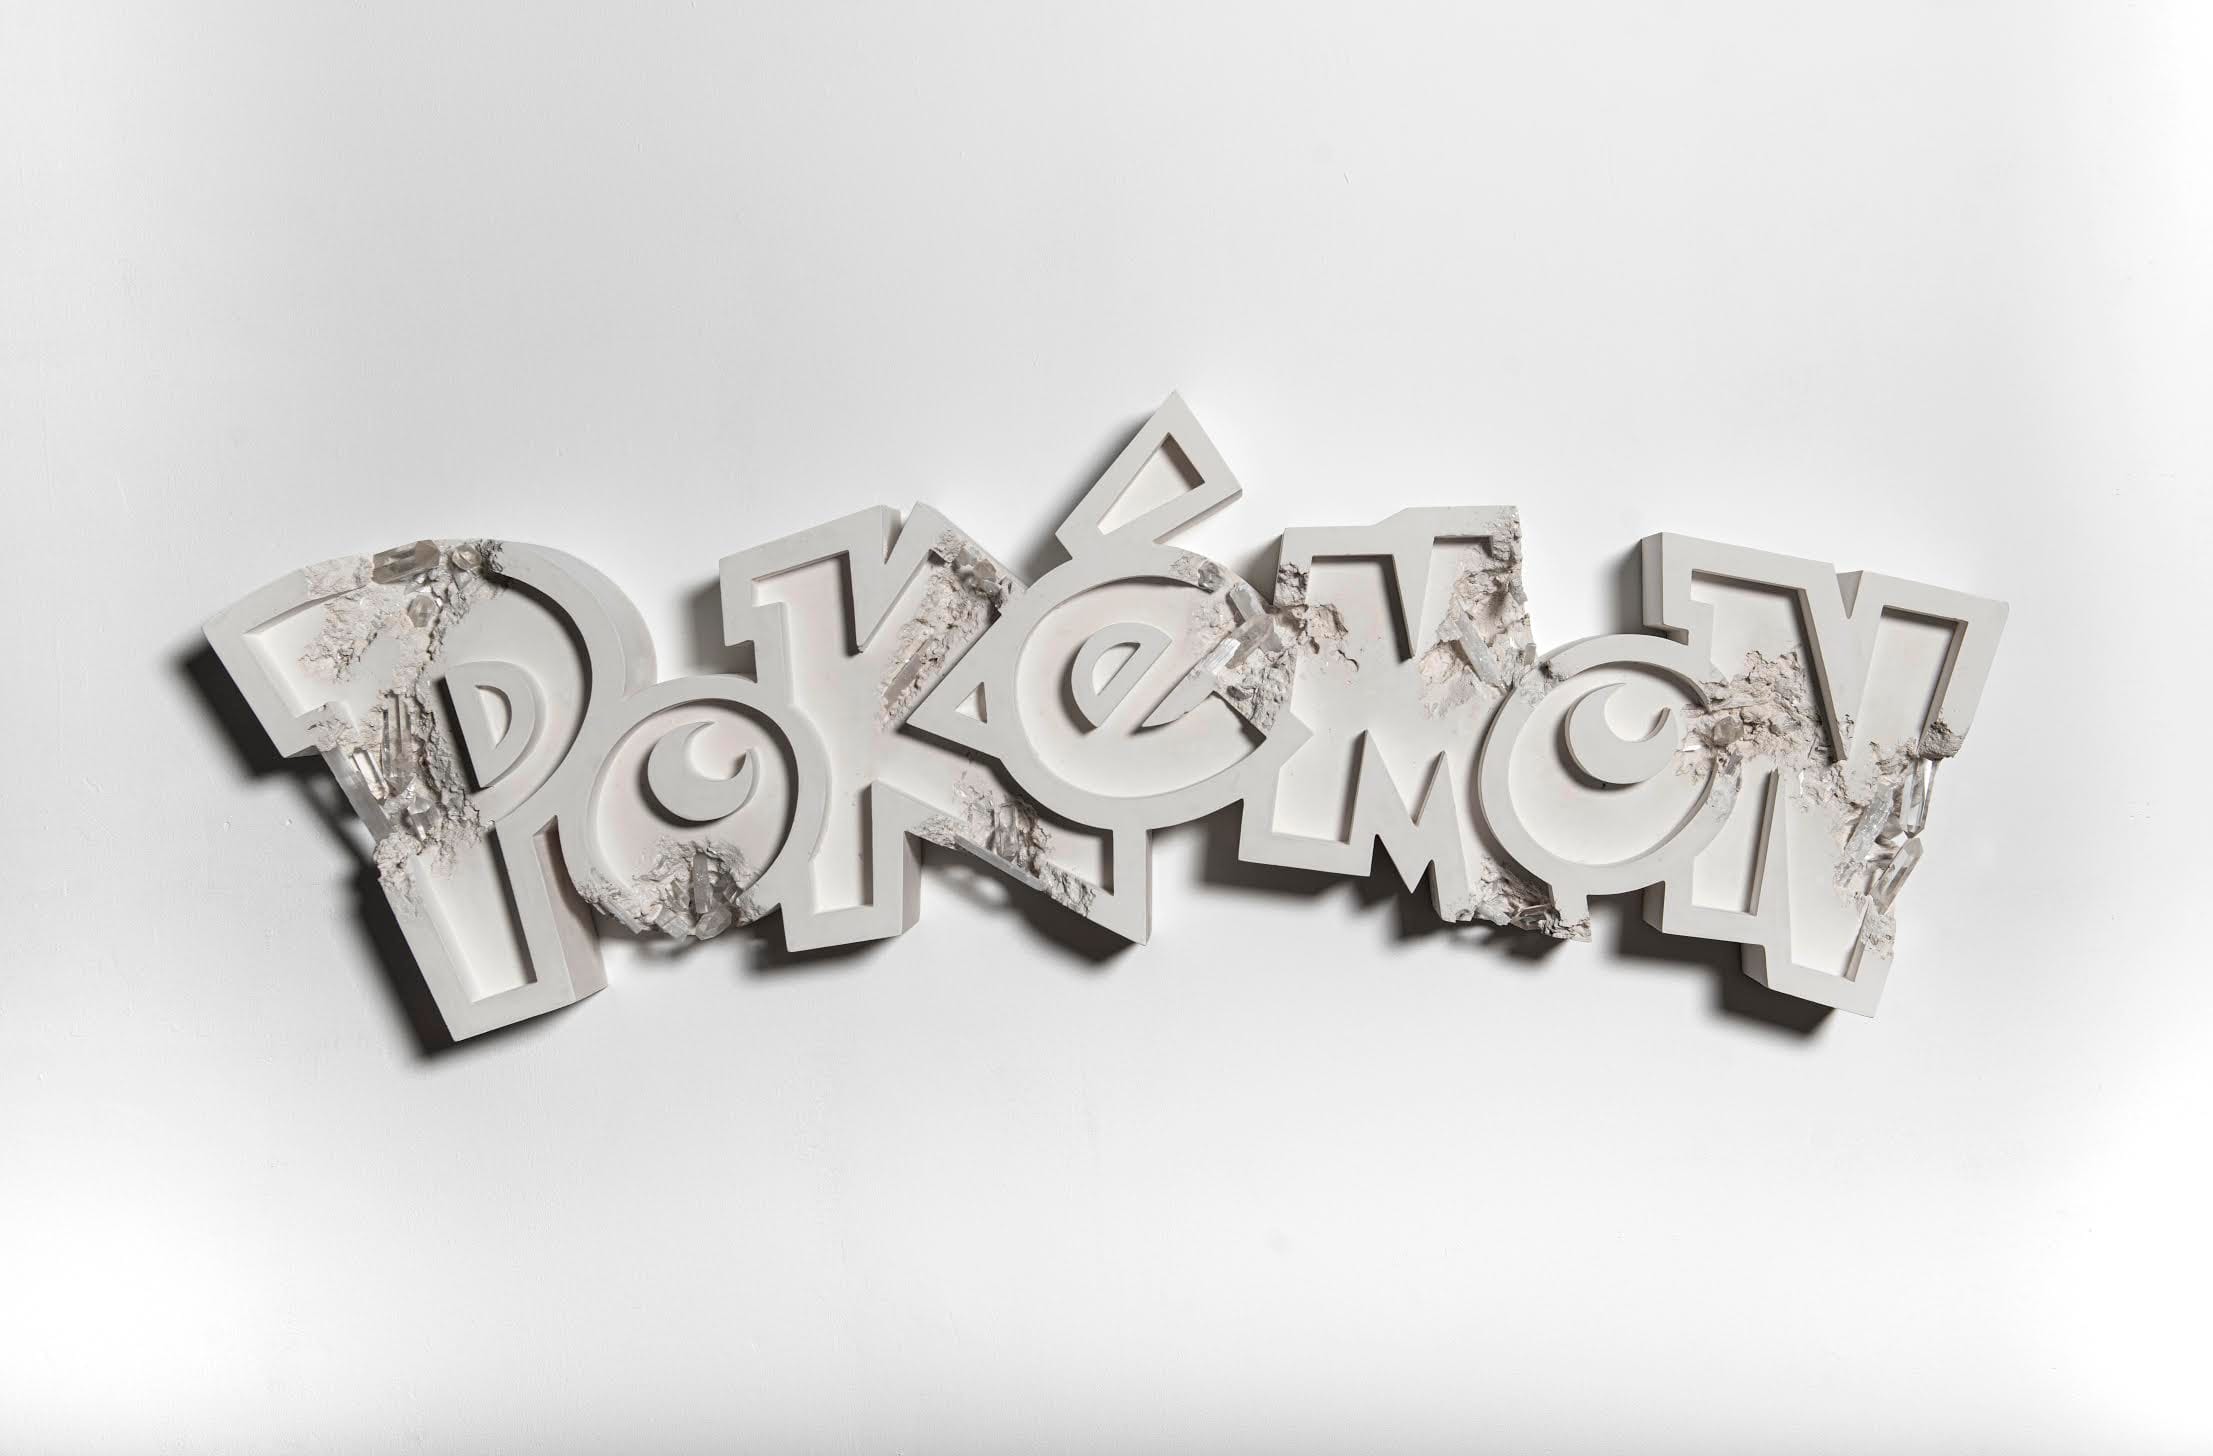 Pokémon Teams Up with Daniel Arsham on Scultural Art Project 